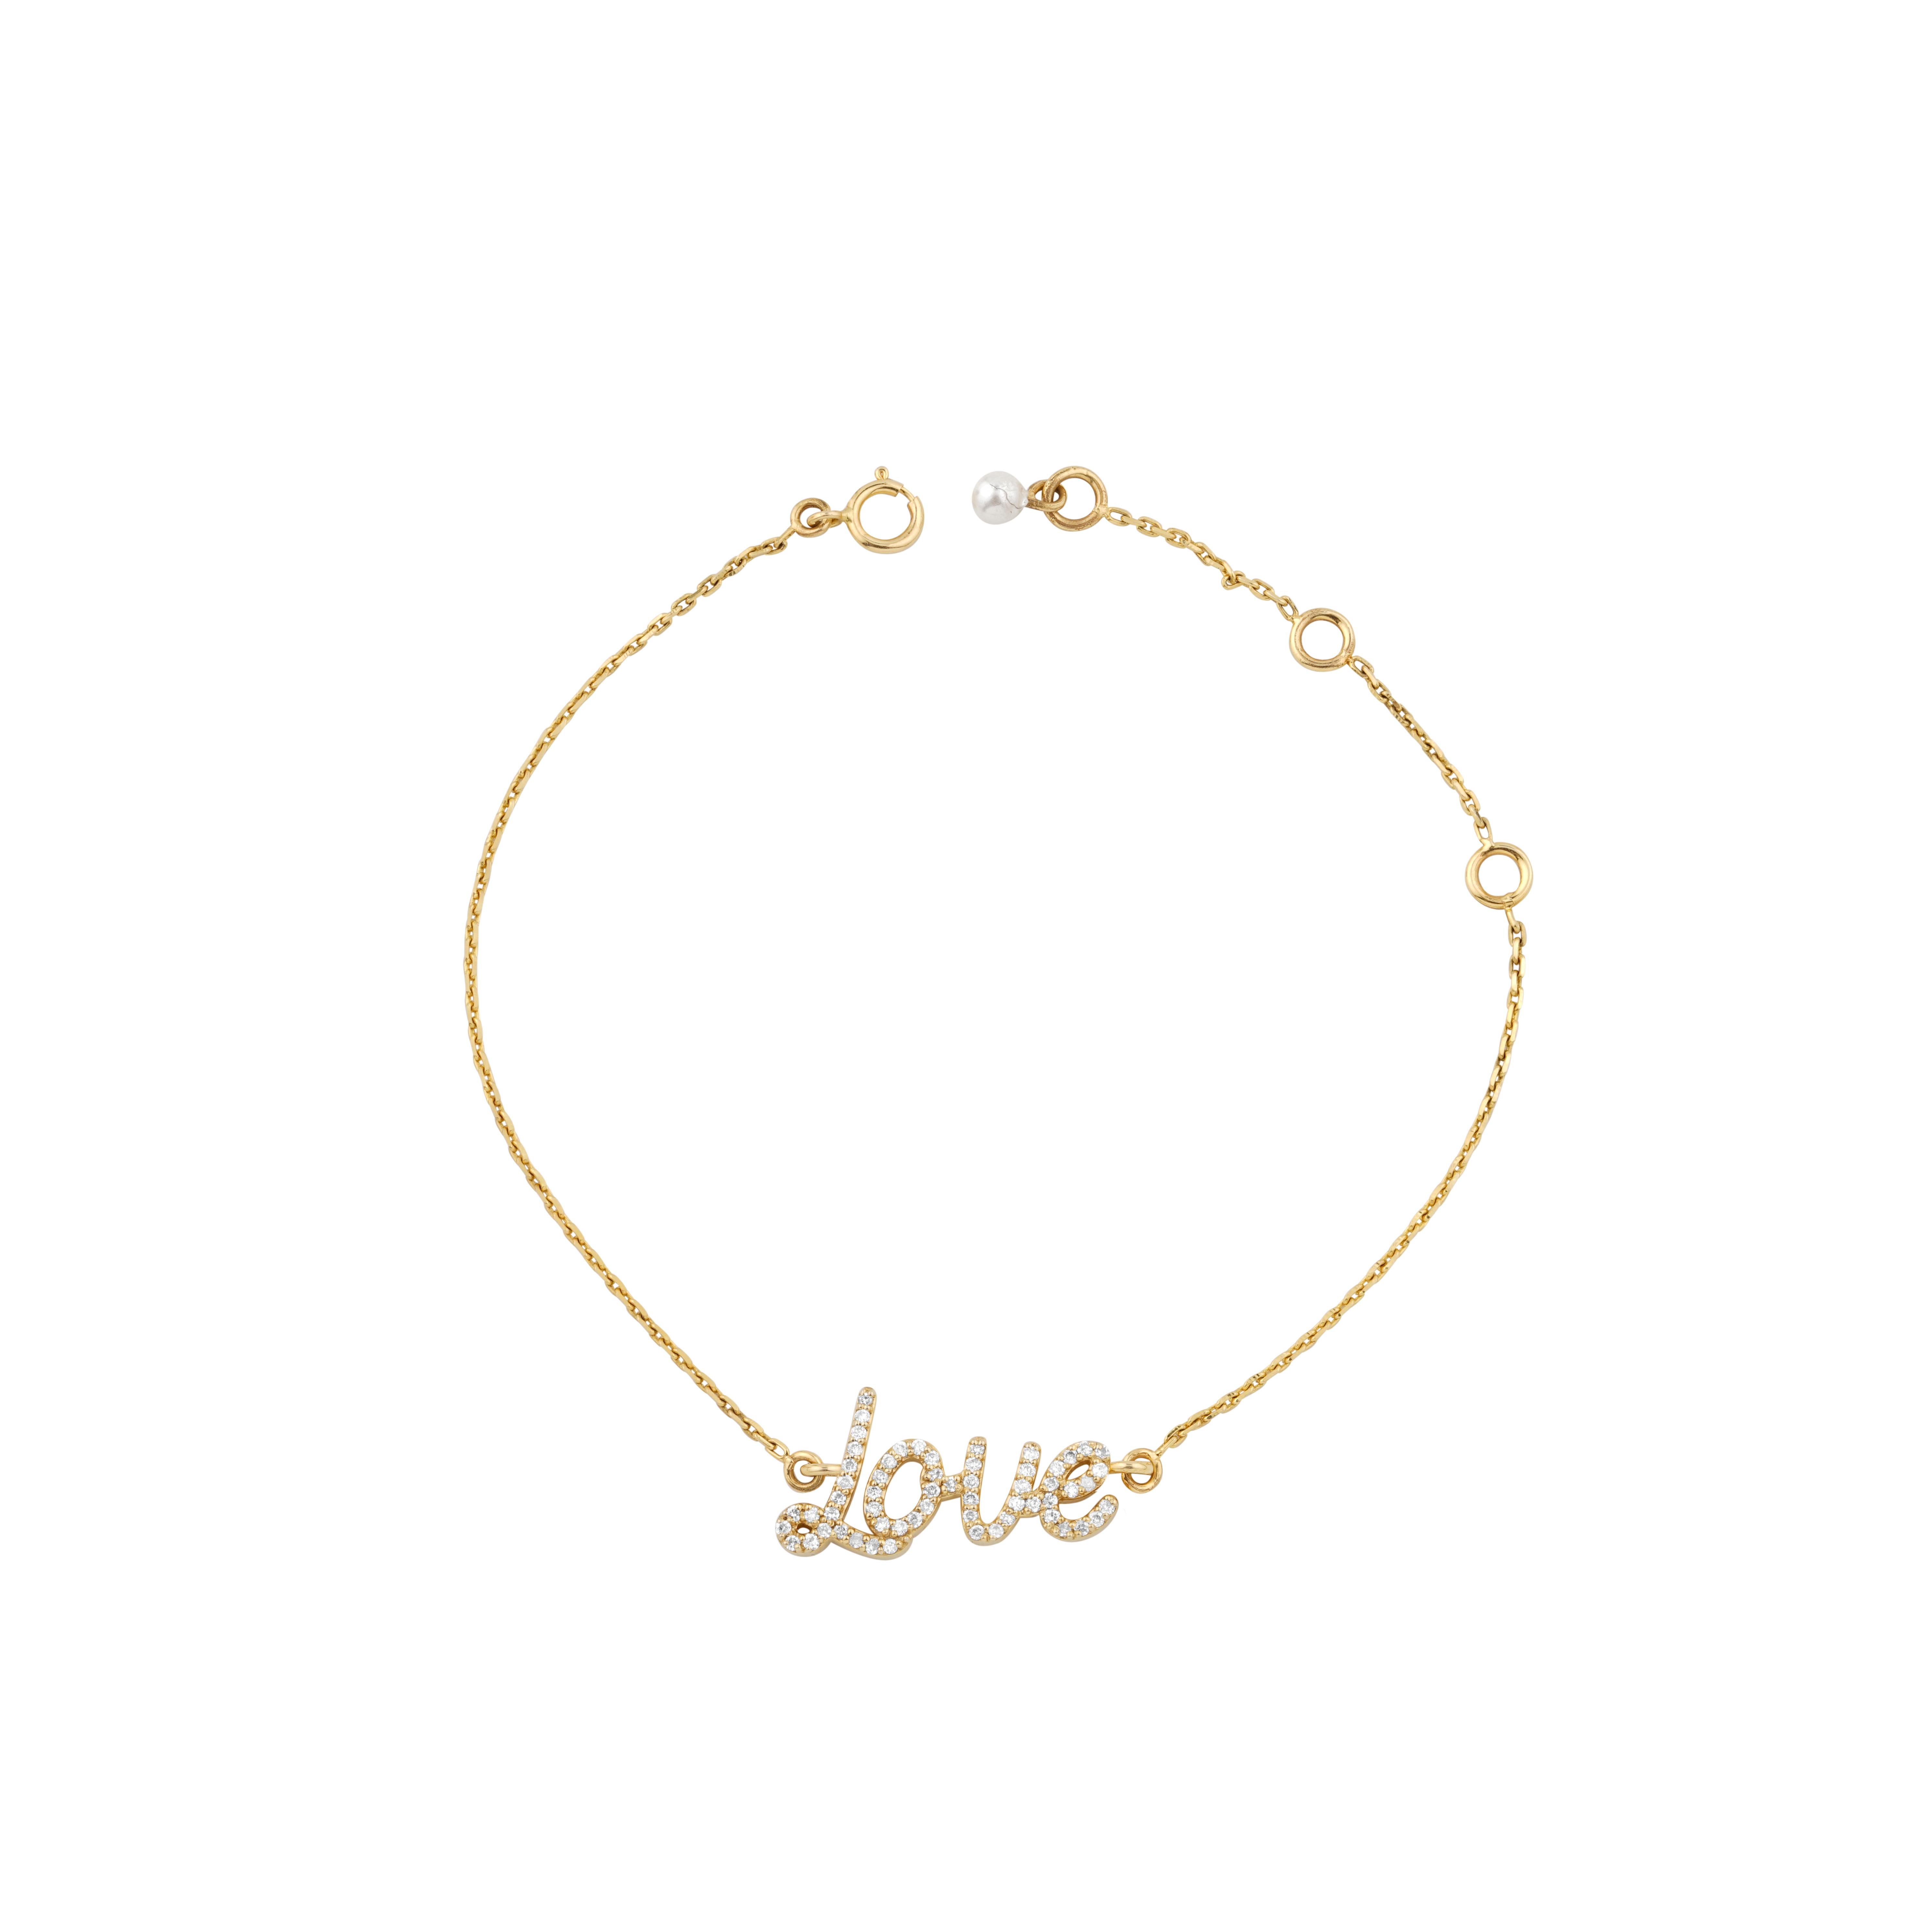 Diamond Love Charm Bracelet is an elegant bracelet, likely a fine jewelry piece, with the word 